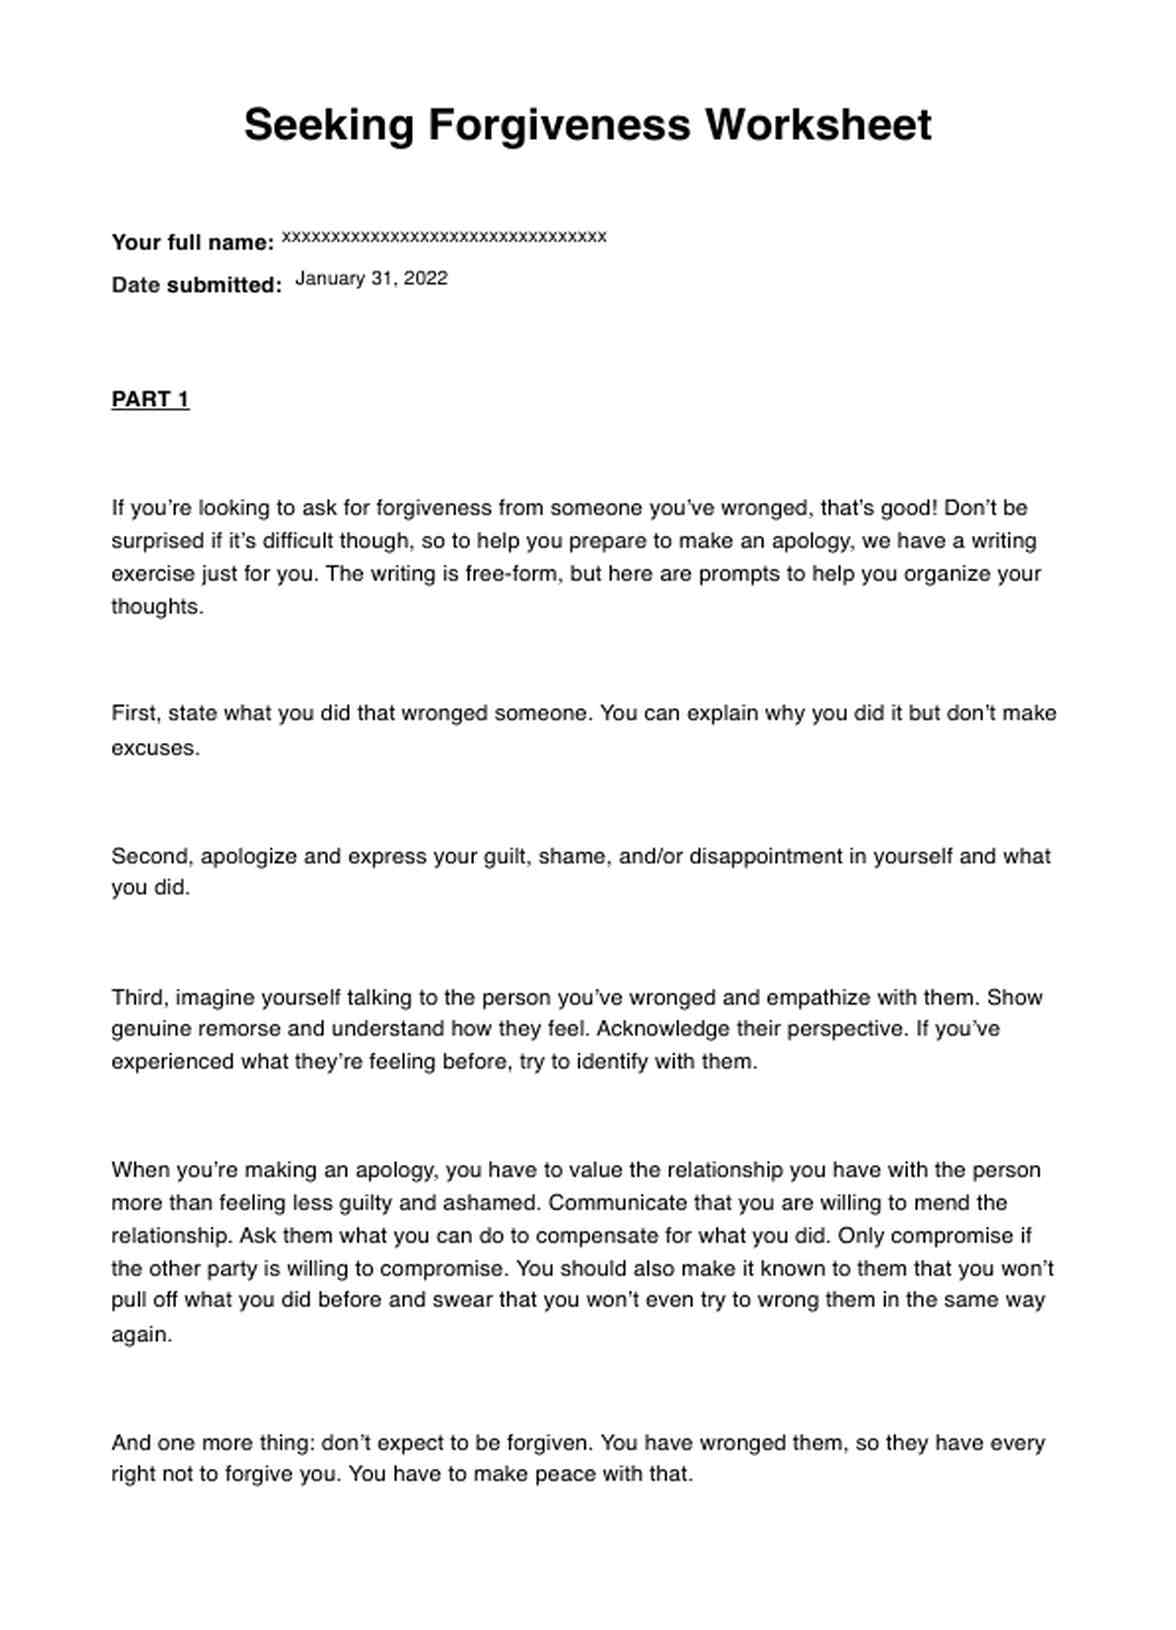 Seeking Forgiveness Worksheet PDF Example